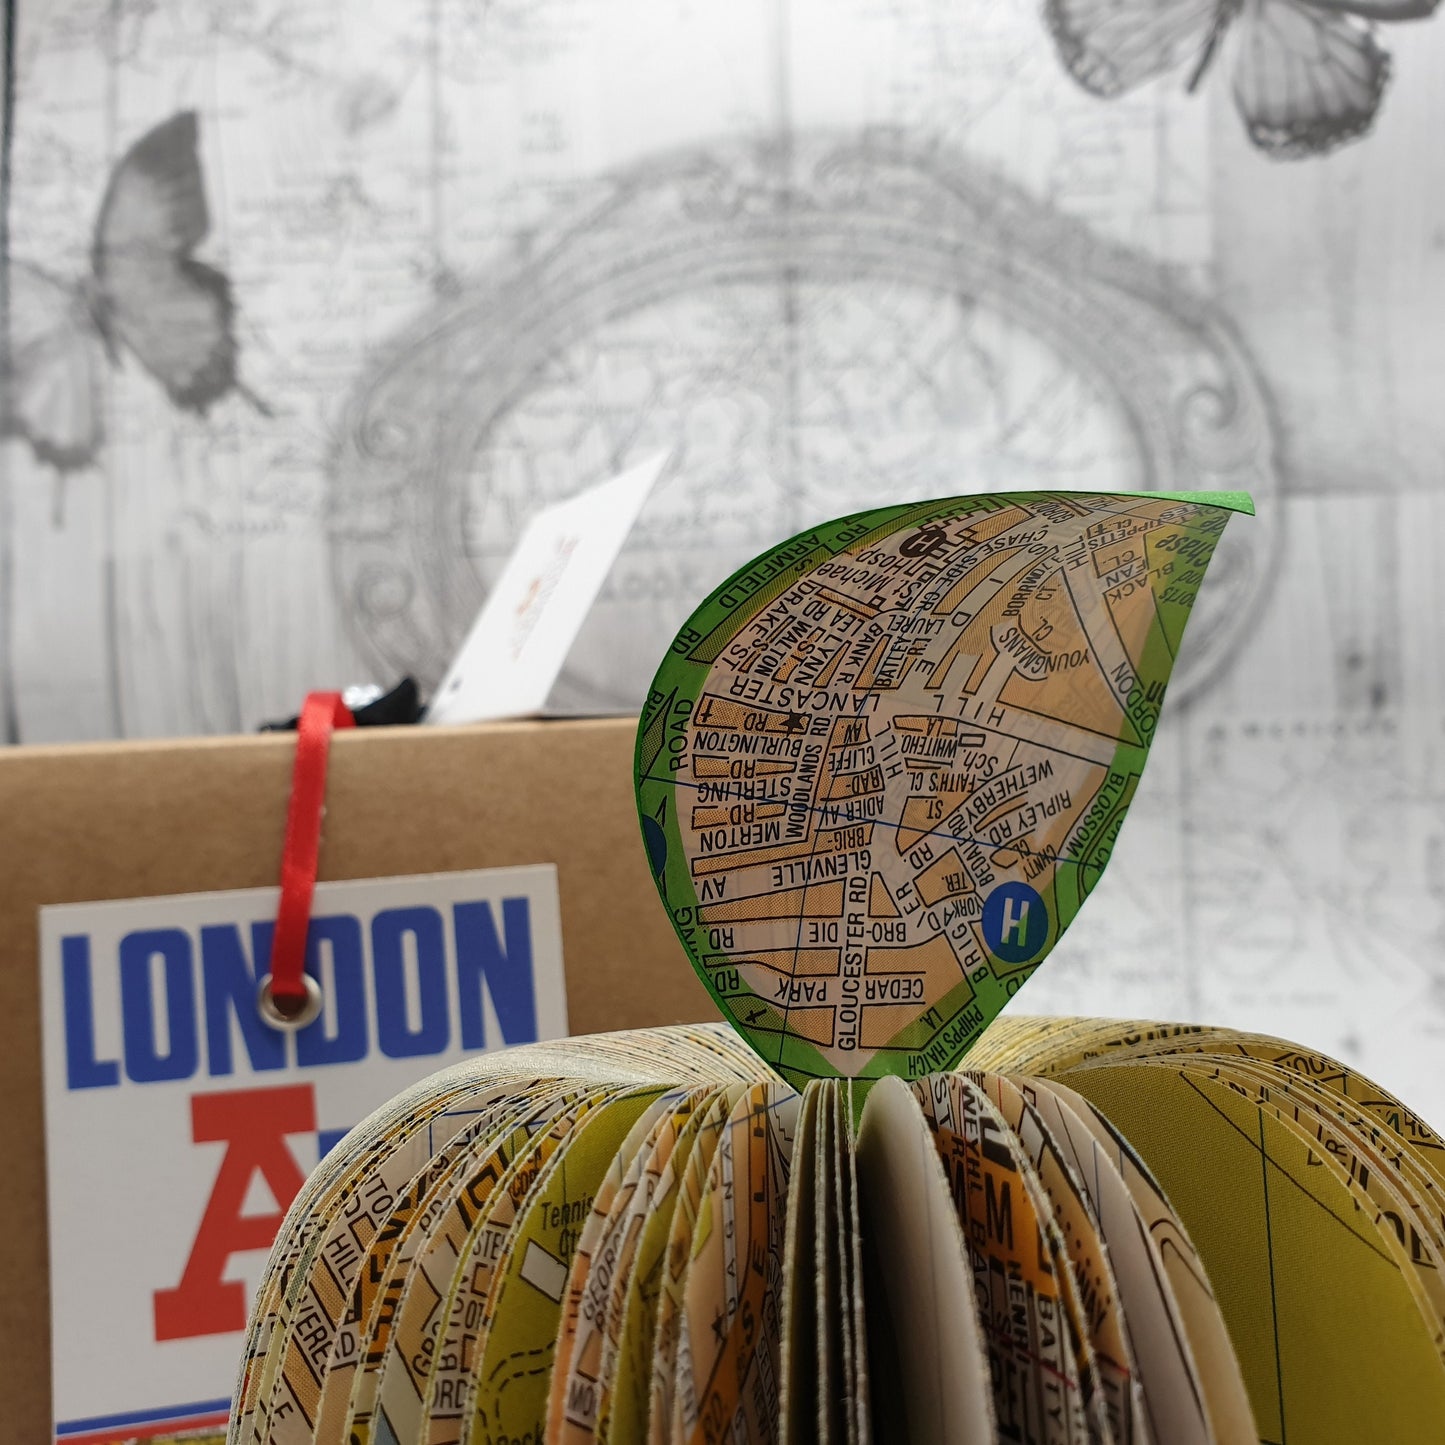 A-Z London Map Gift